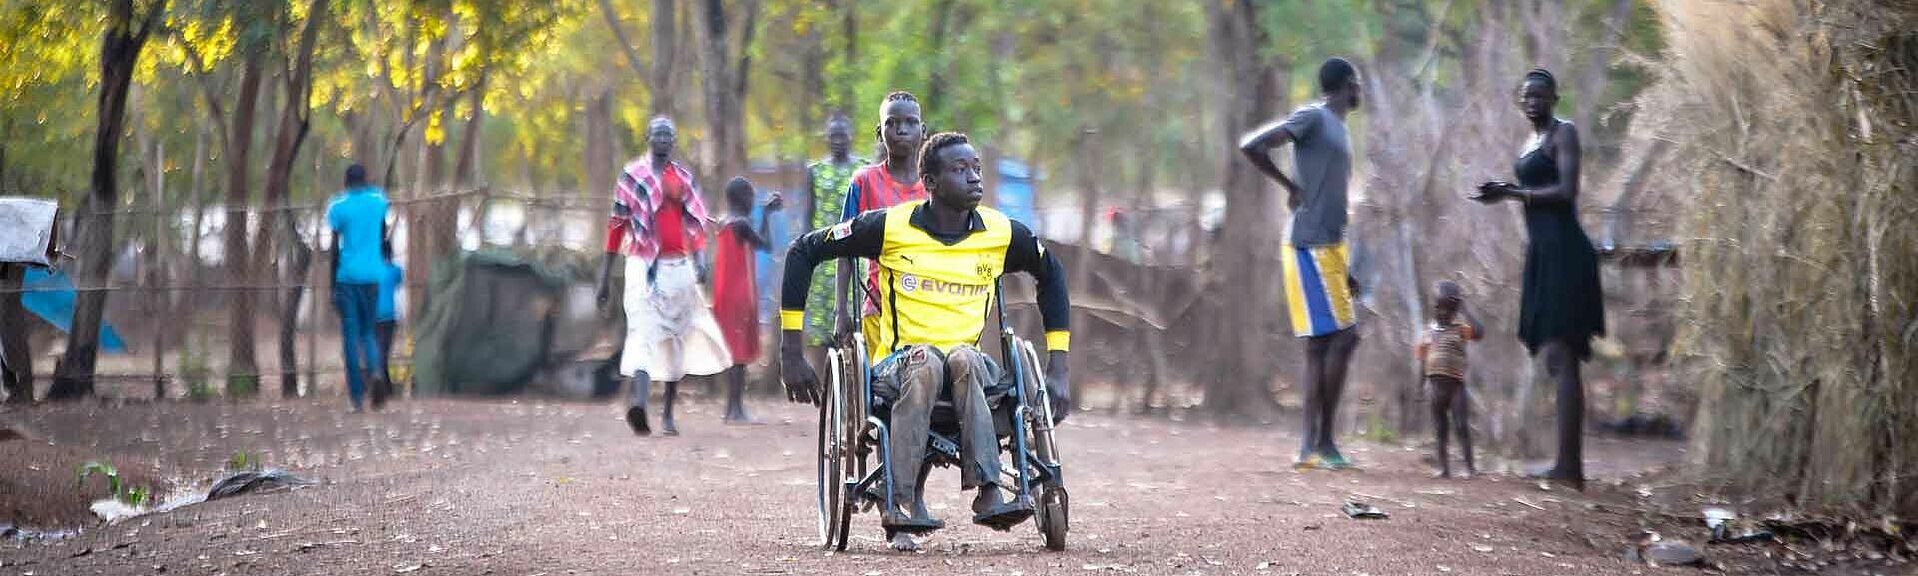 Junger Mann im Rollstuhl in afrikanischem Flüchtlingslager